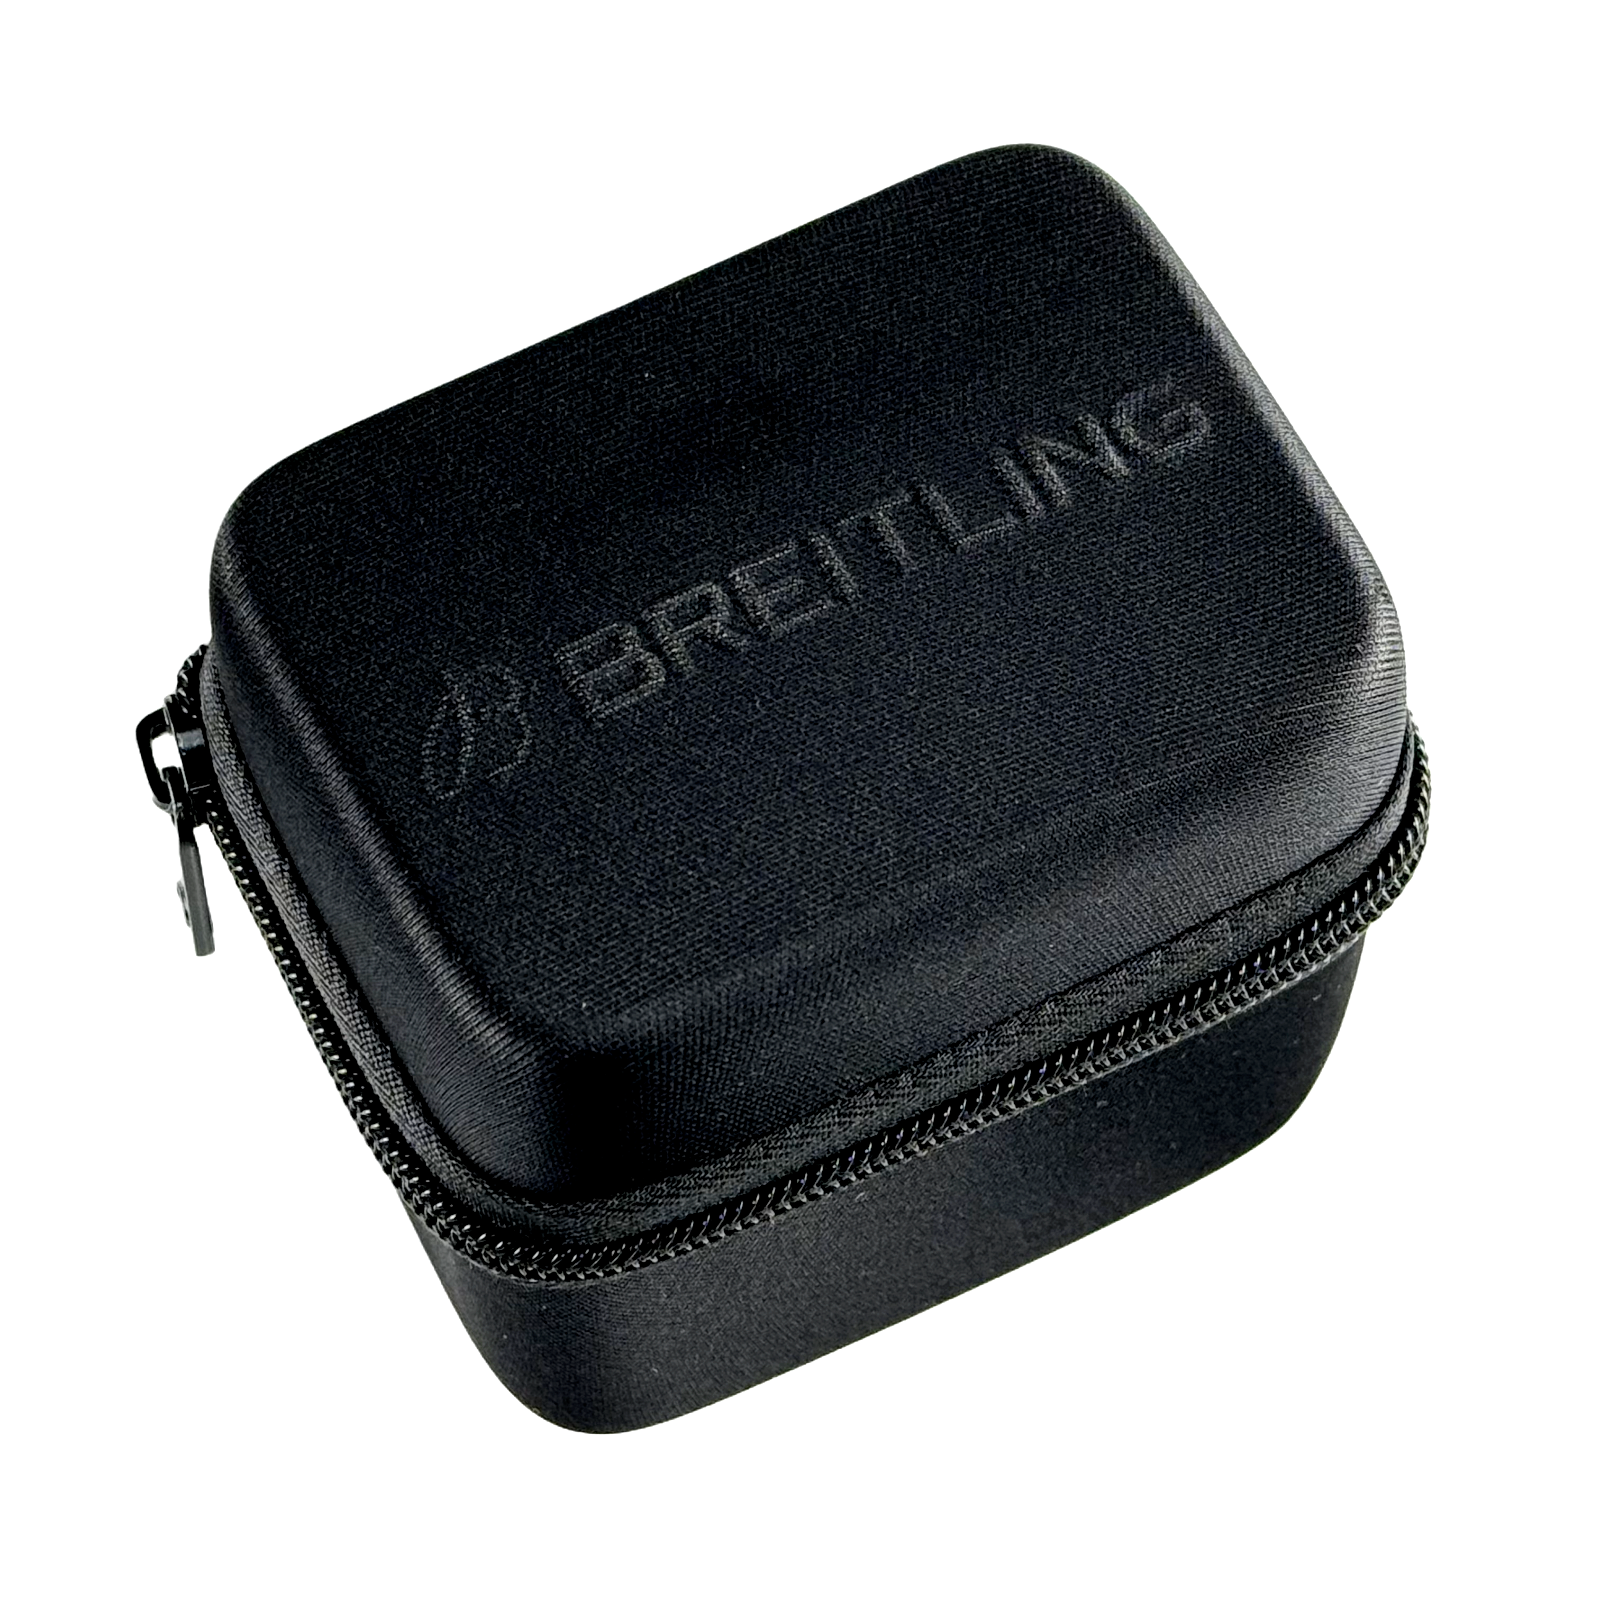  Breitling Travel Case Pouch Service Etui Reiseetui Reisebox Uhrenetui Servicebox